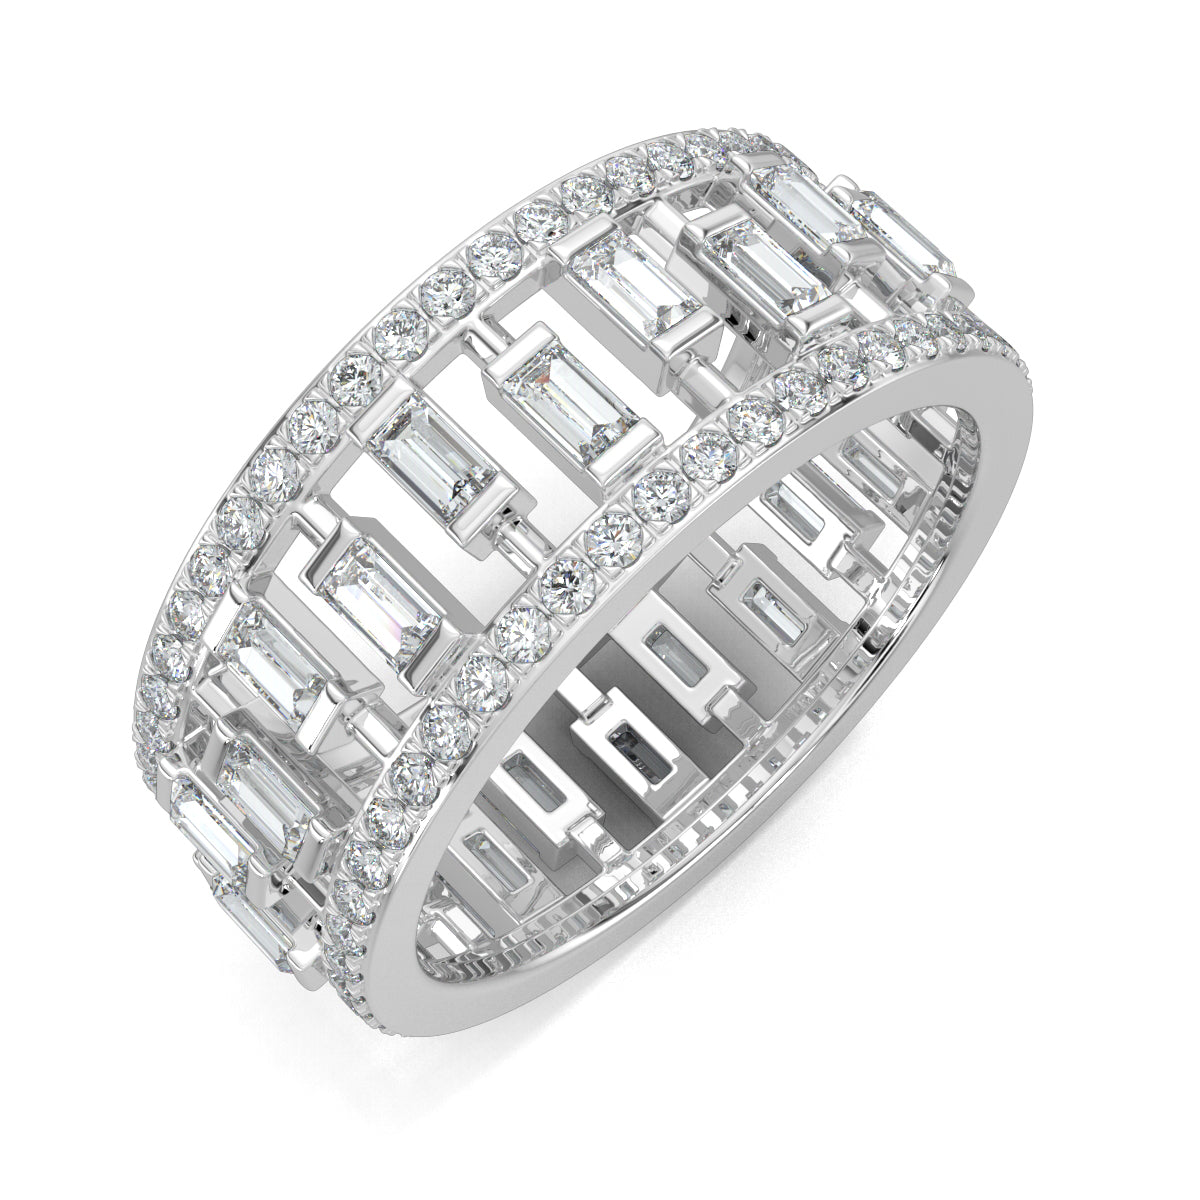 White Gold, Diamond Ring, natural diamond ring, lab-grown diamond ring, dazzling baguette eternity band, round diamonds, baguette diamonds, eternity ring, diamond ring